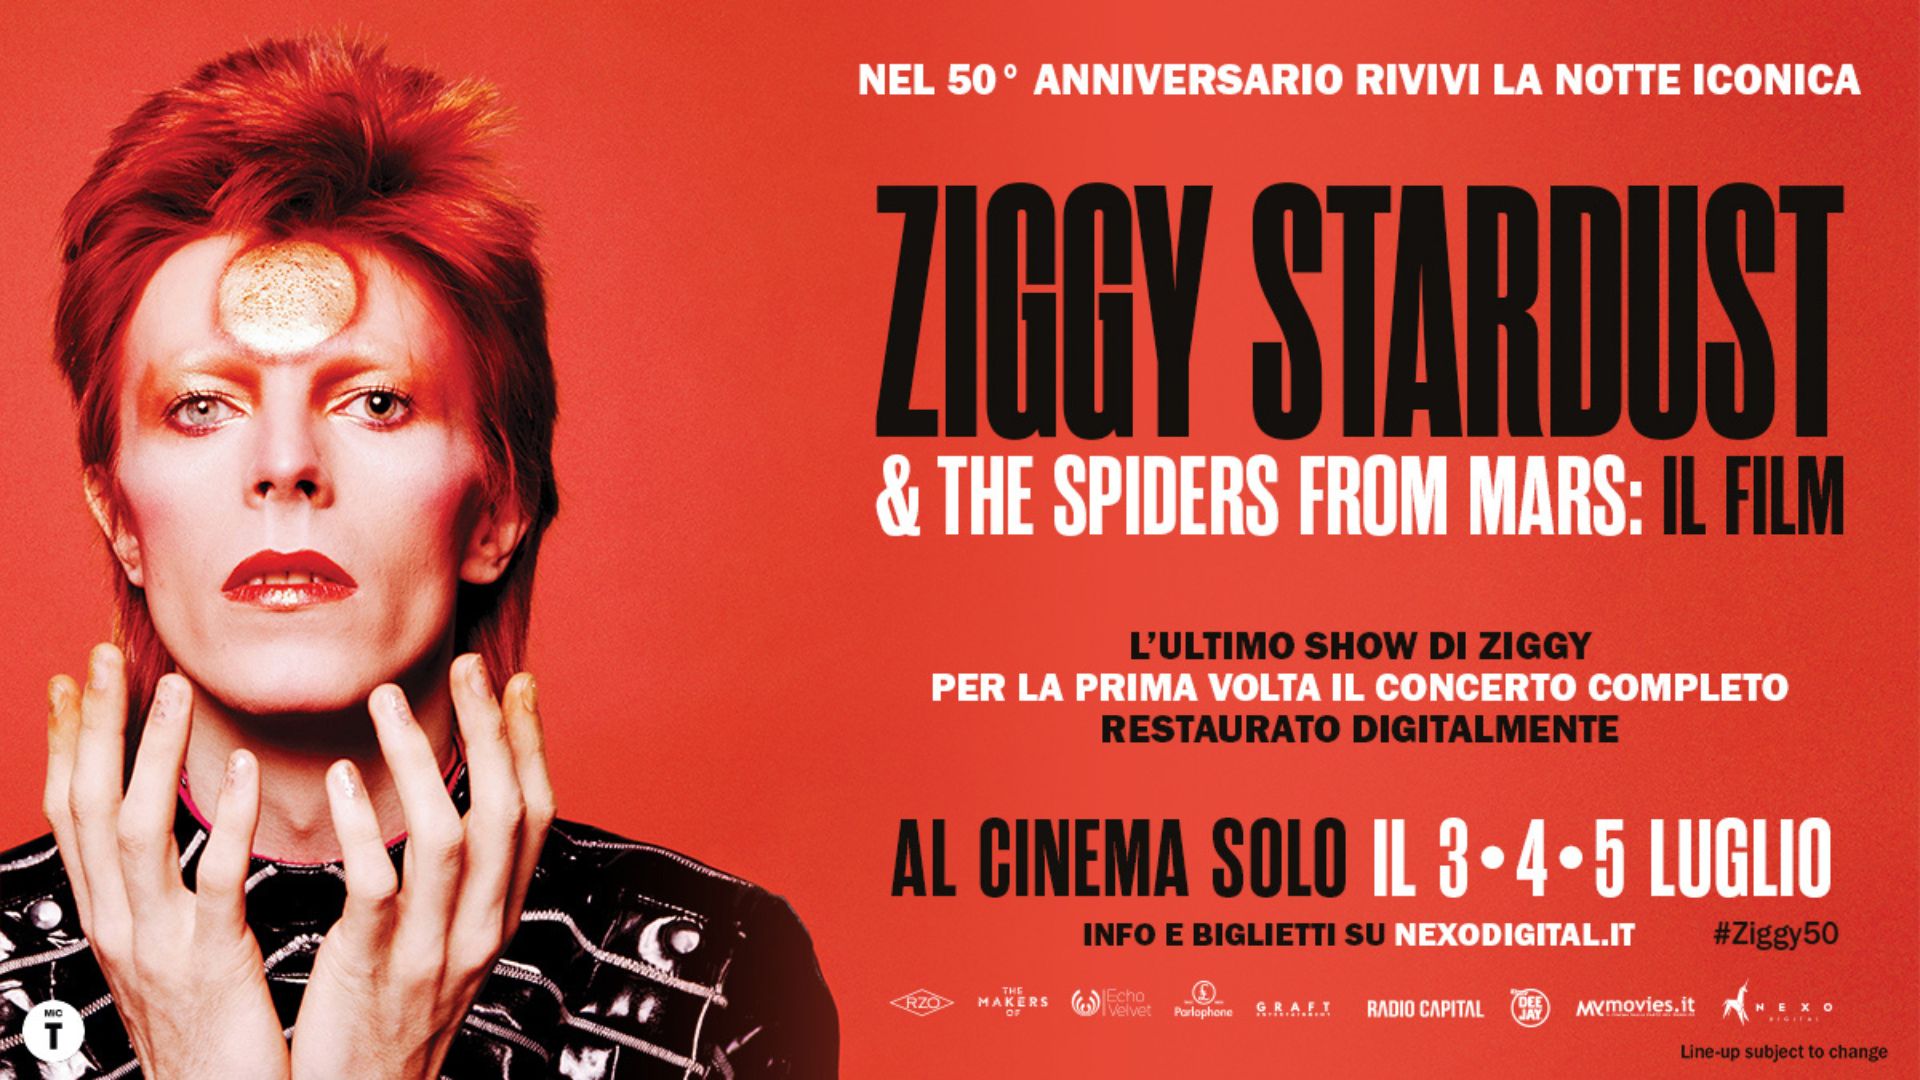 David Bowie - Ziggy Stardust - cinema - poster